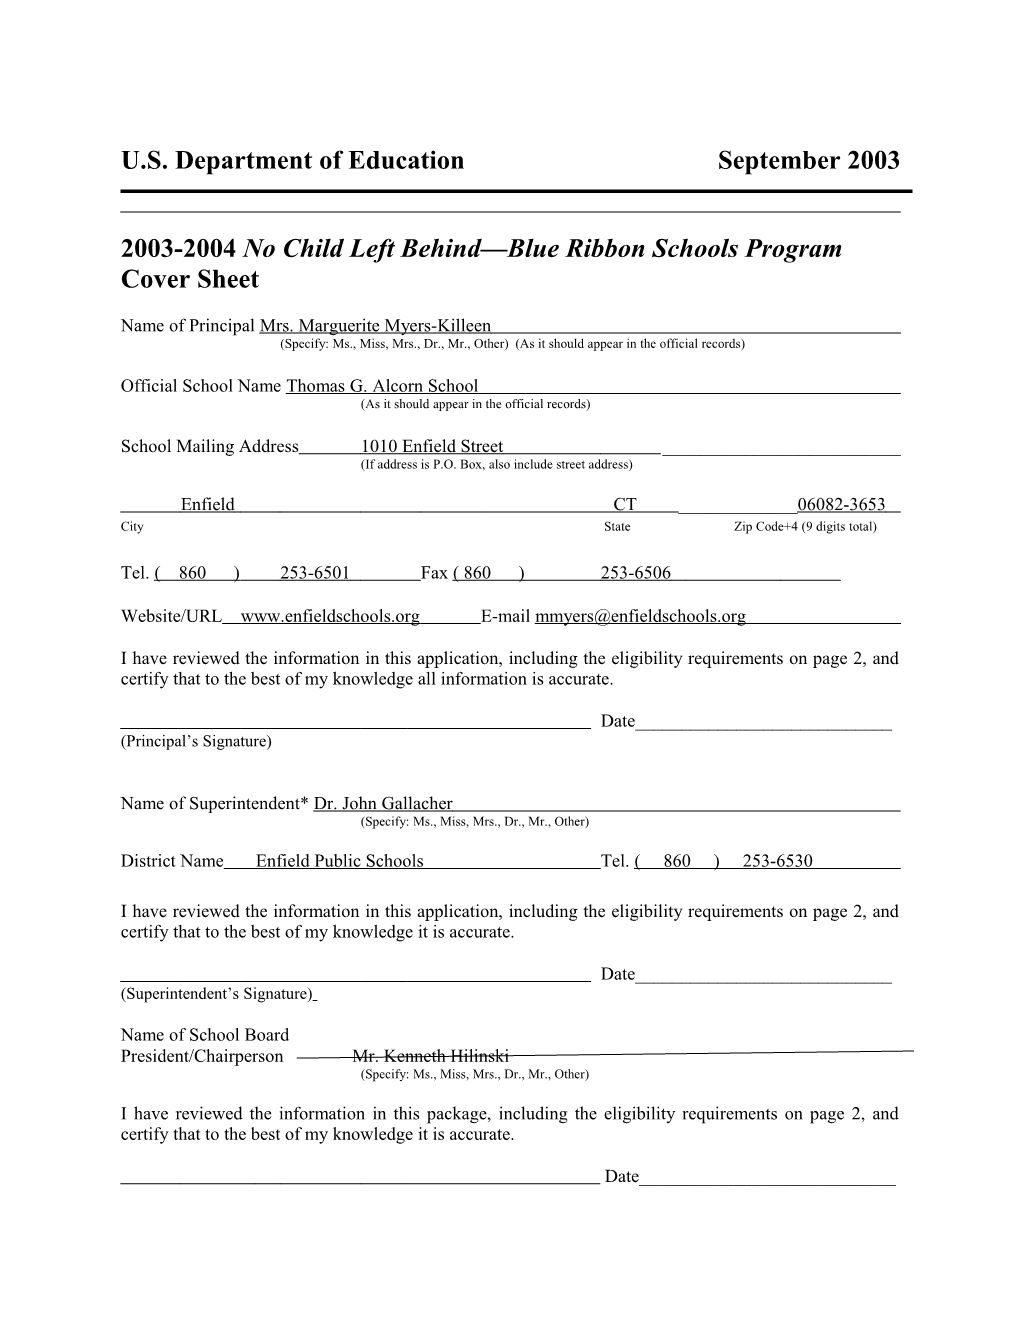 Thomas G. Alcorn School 2004 No Child Left Behind-Blue Ribbon School Application (Msword)